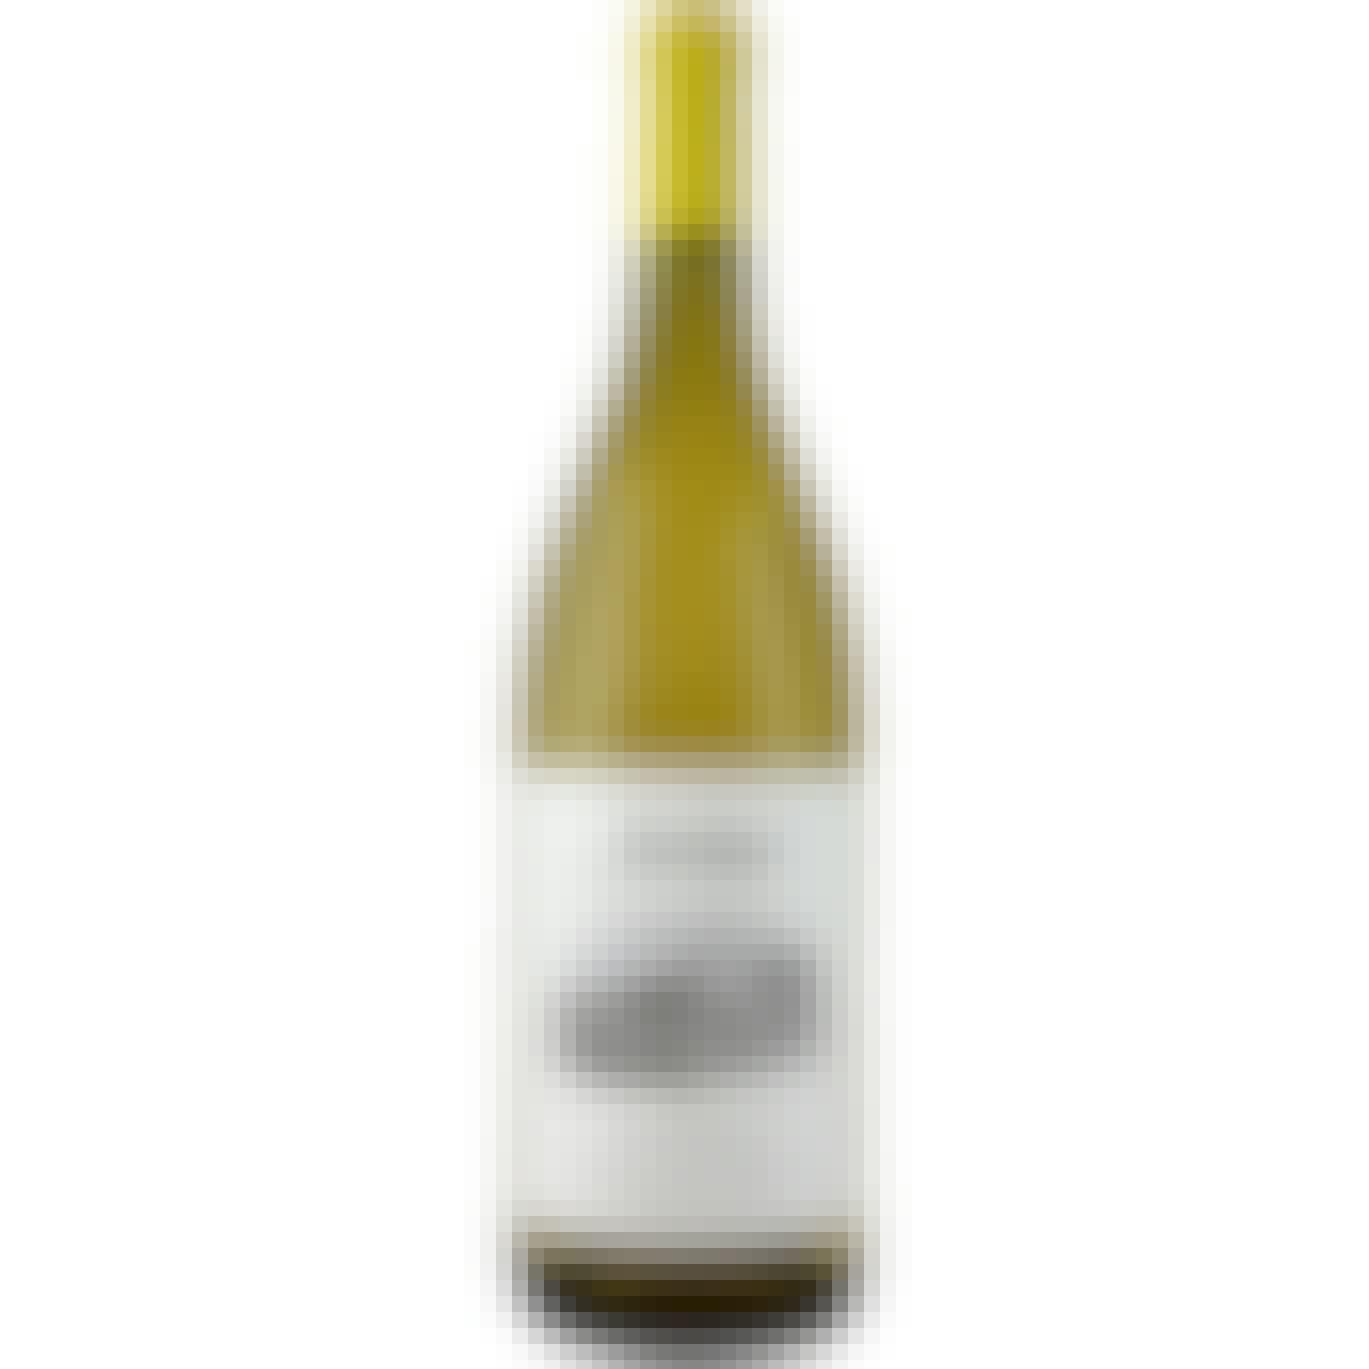 Jordan Winery Chardonnay 2018 750ml